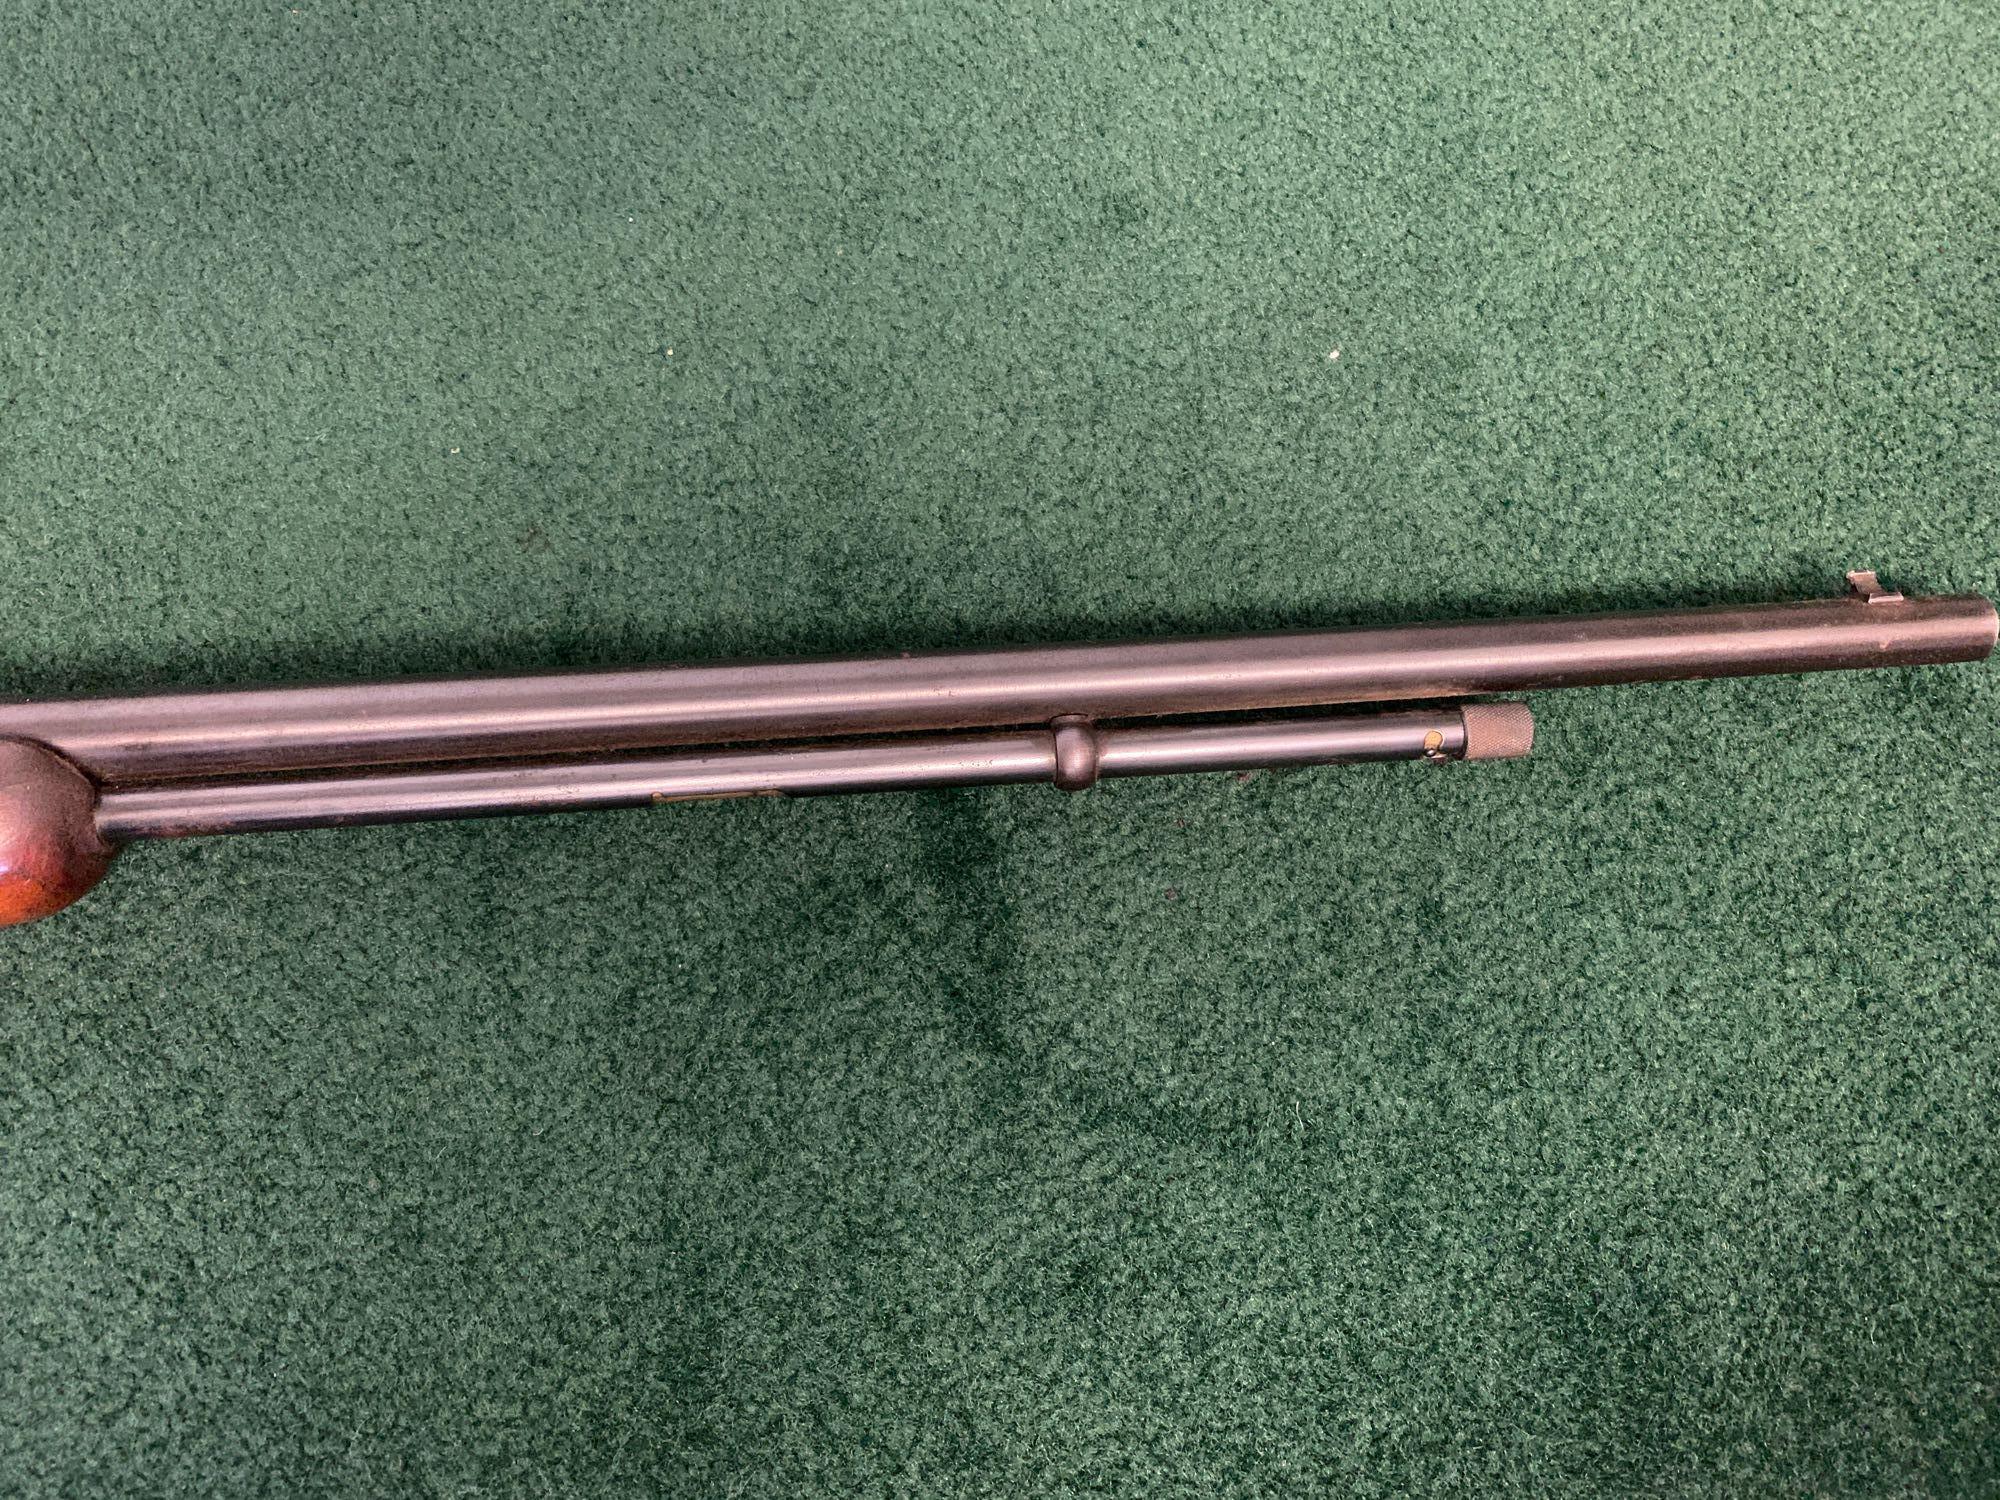 Remington Model 550-1 .22LR Semi-automatic rifle